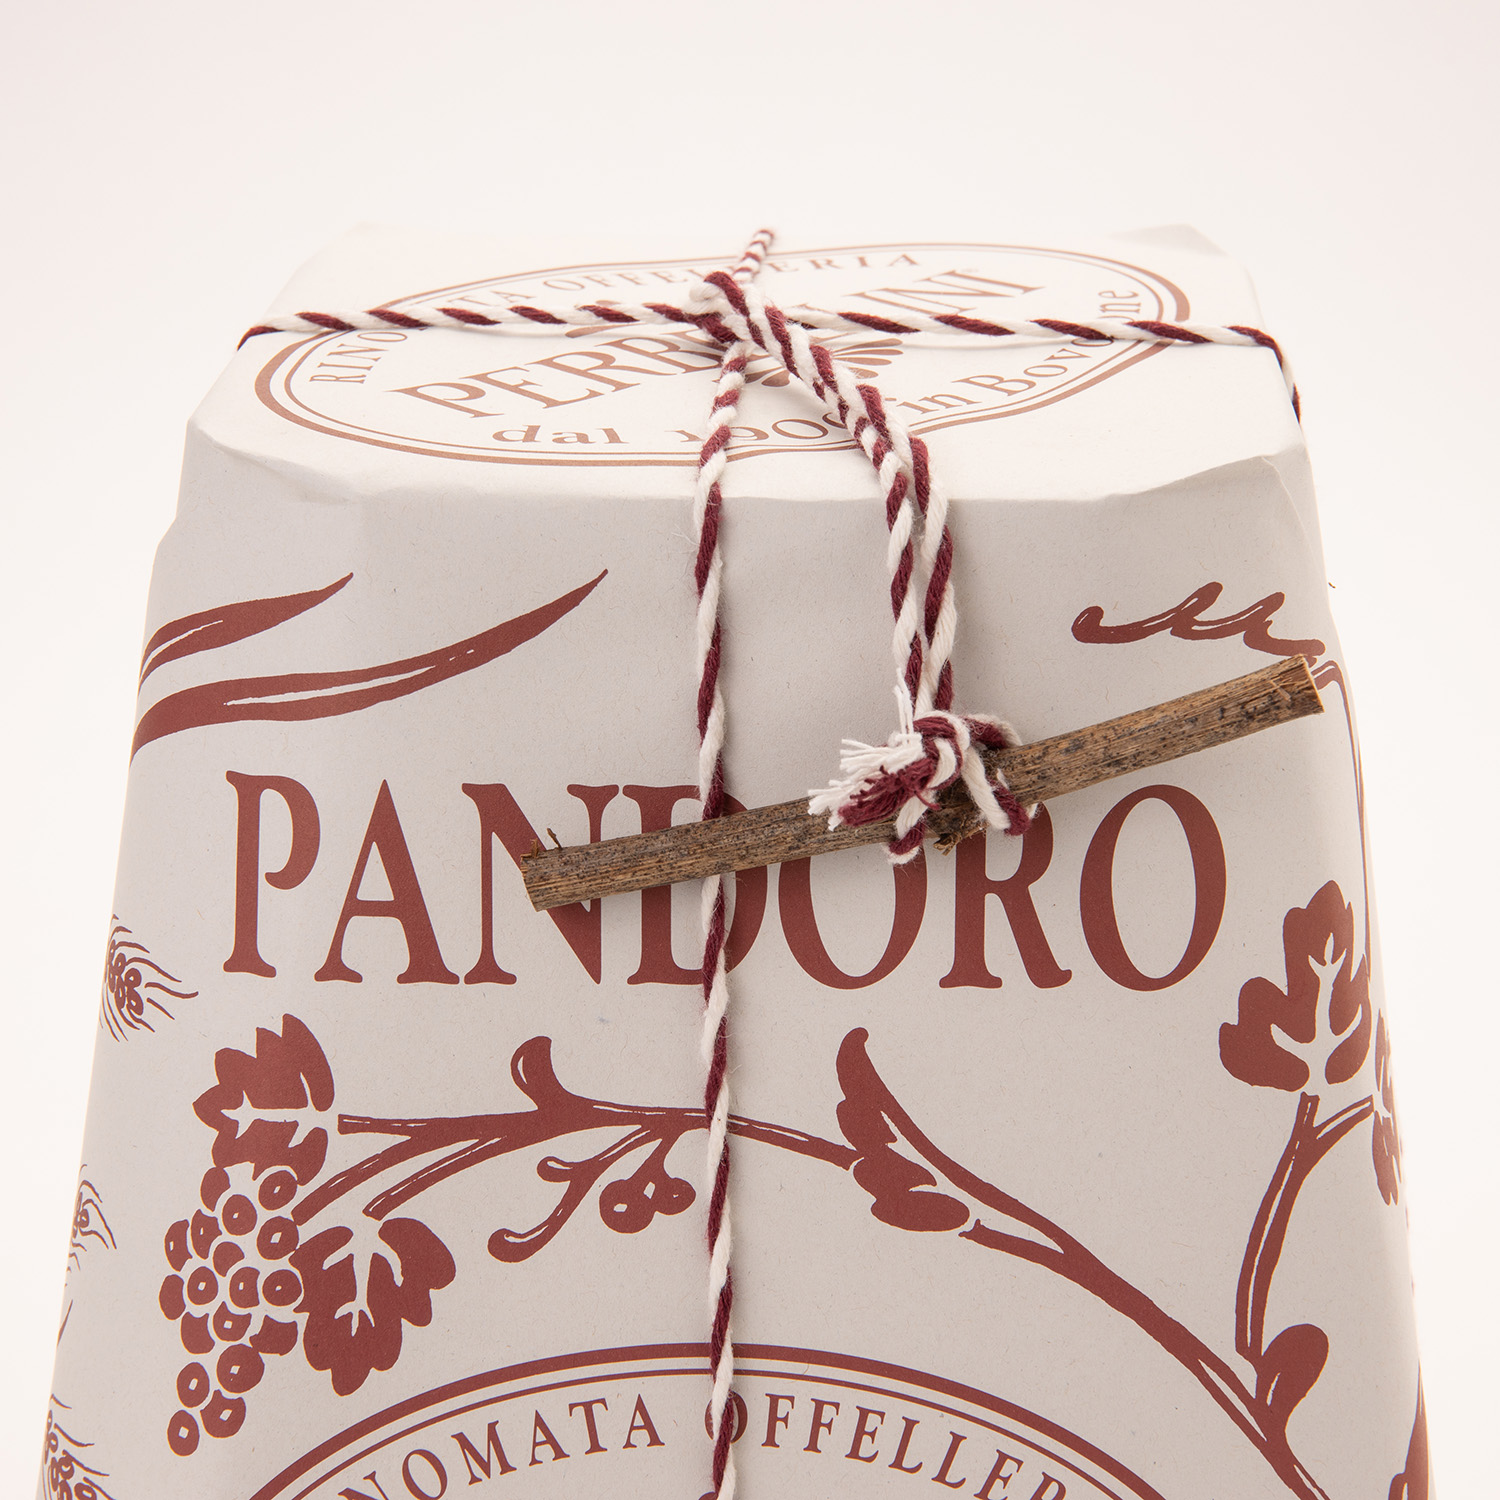 Pandoro Baked goods